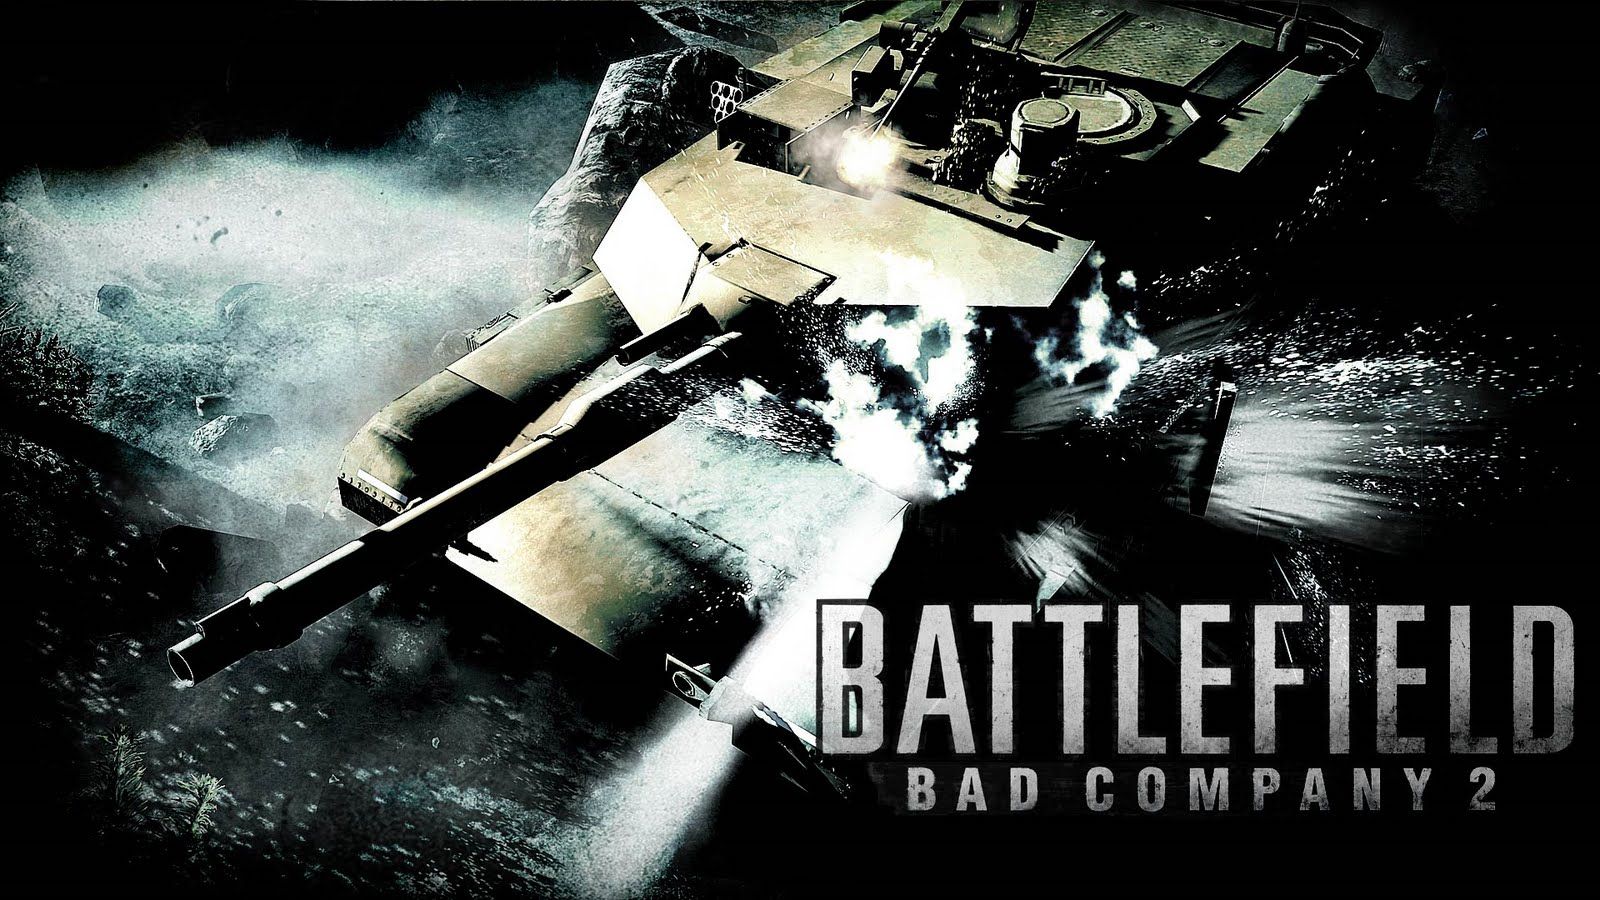 Battlefield Bad Company 2 Wallpaper #3 - Battlefield Informer Gallery